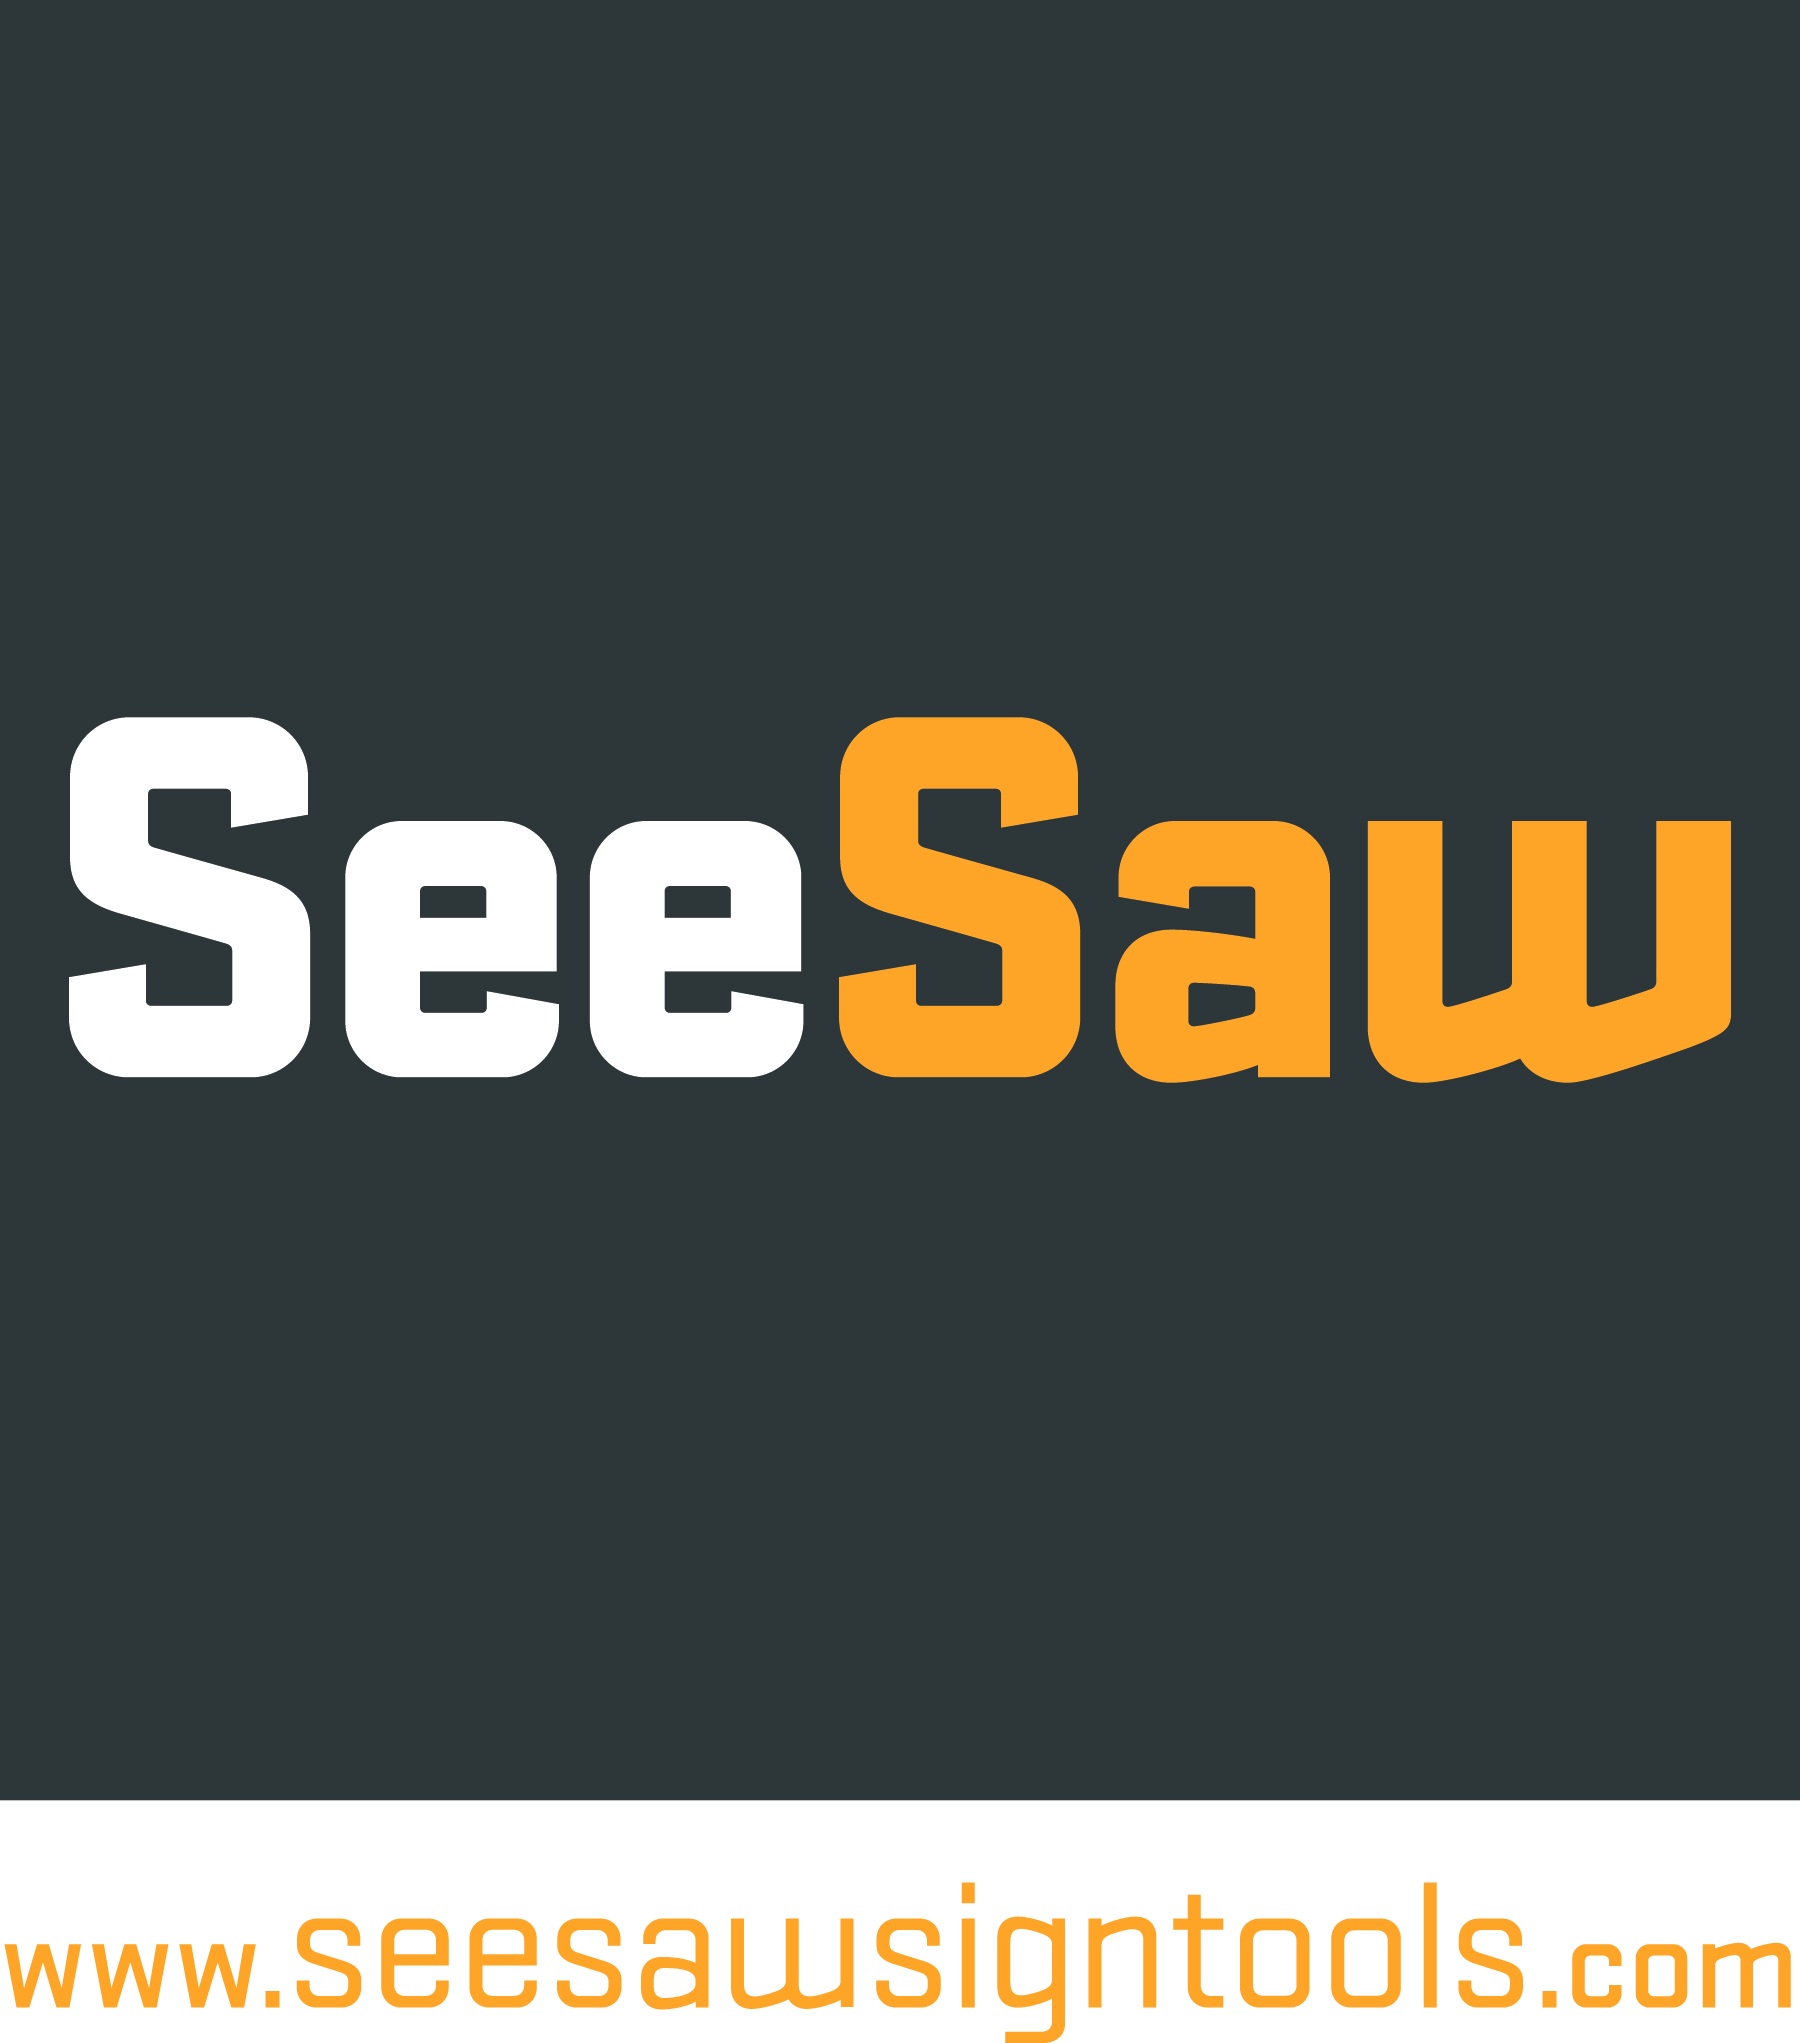 SeeSaw-logo-seesawsigntools2.jpg